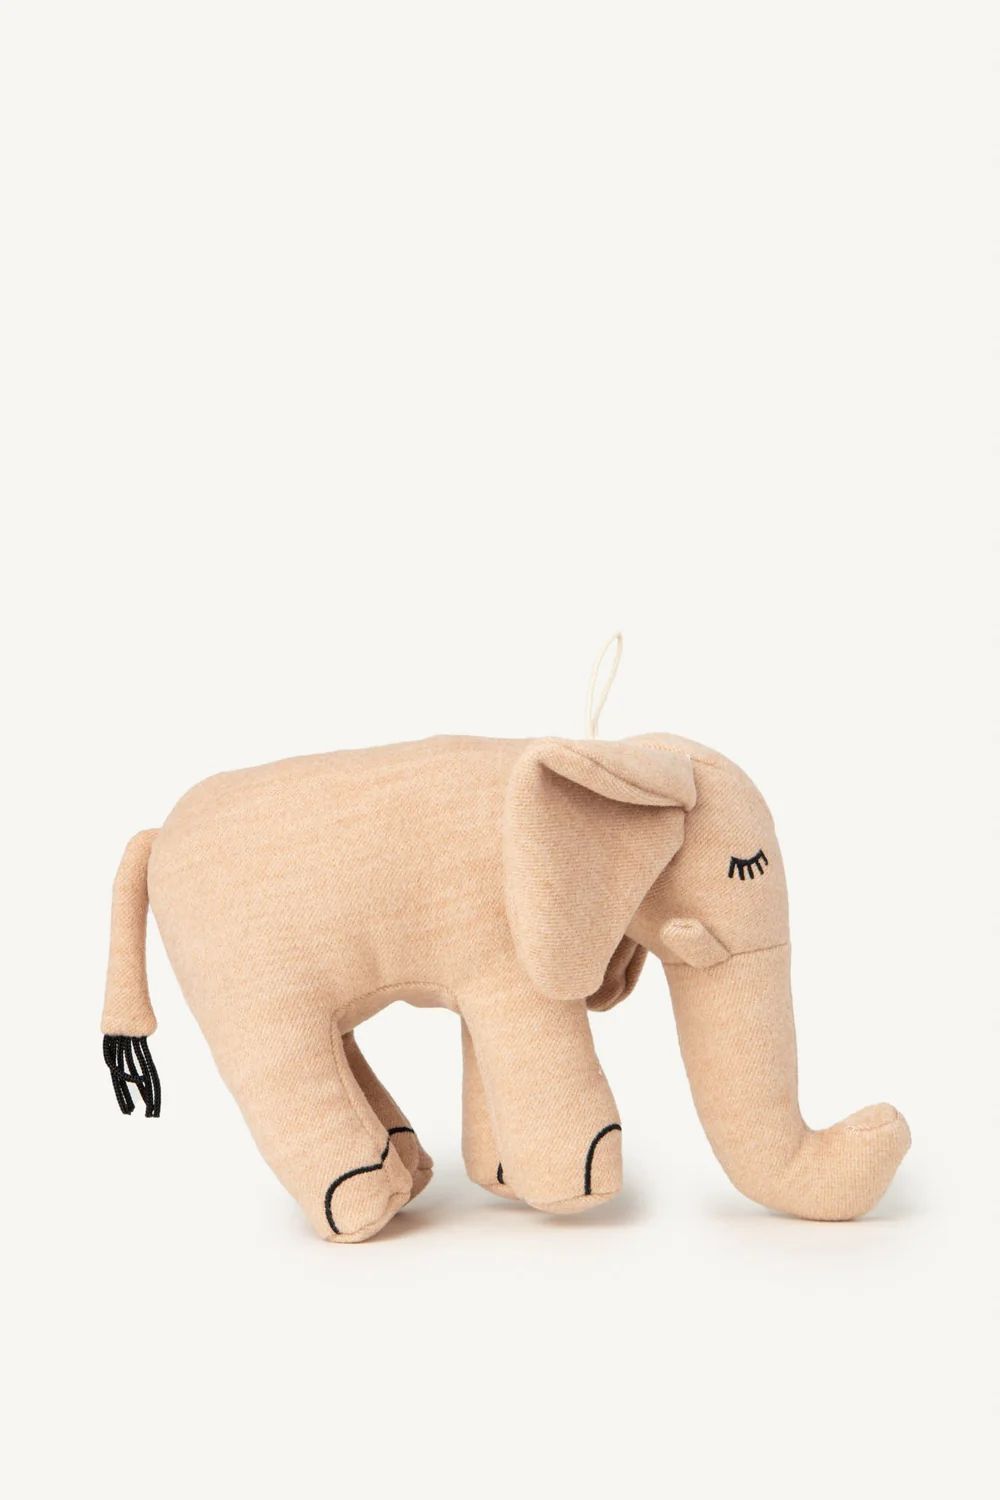 Elsie Elephant Plush Toy | max-bone